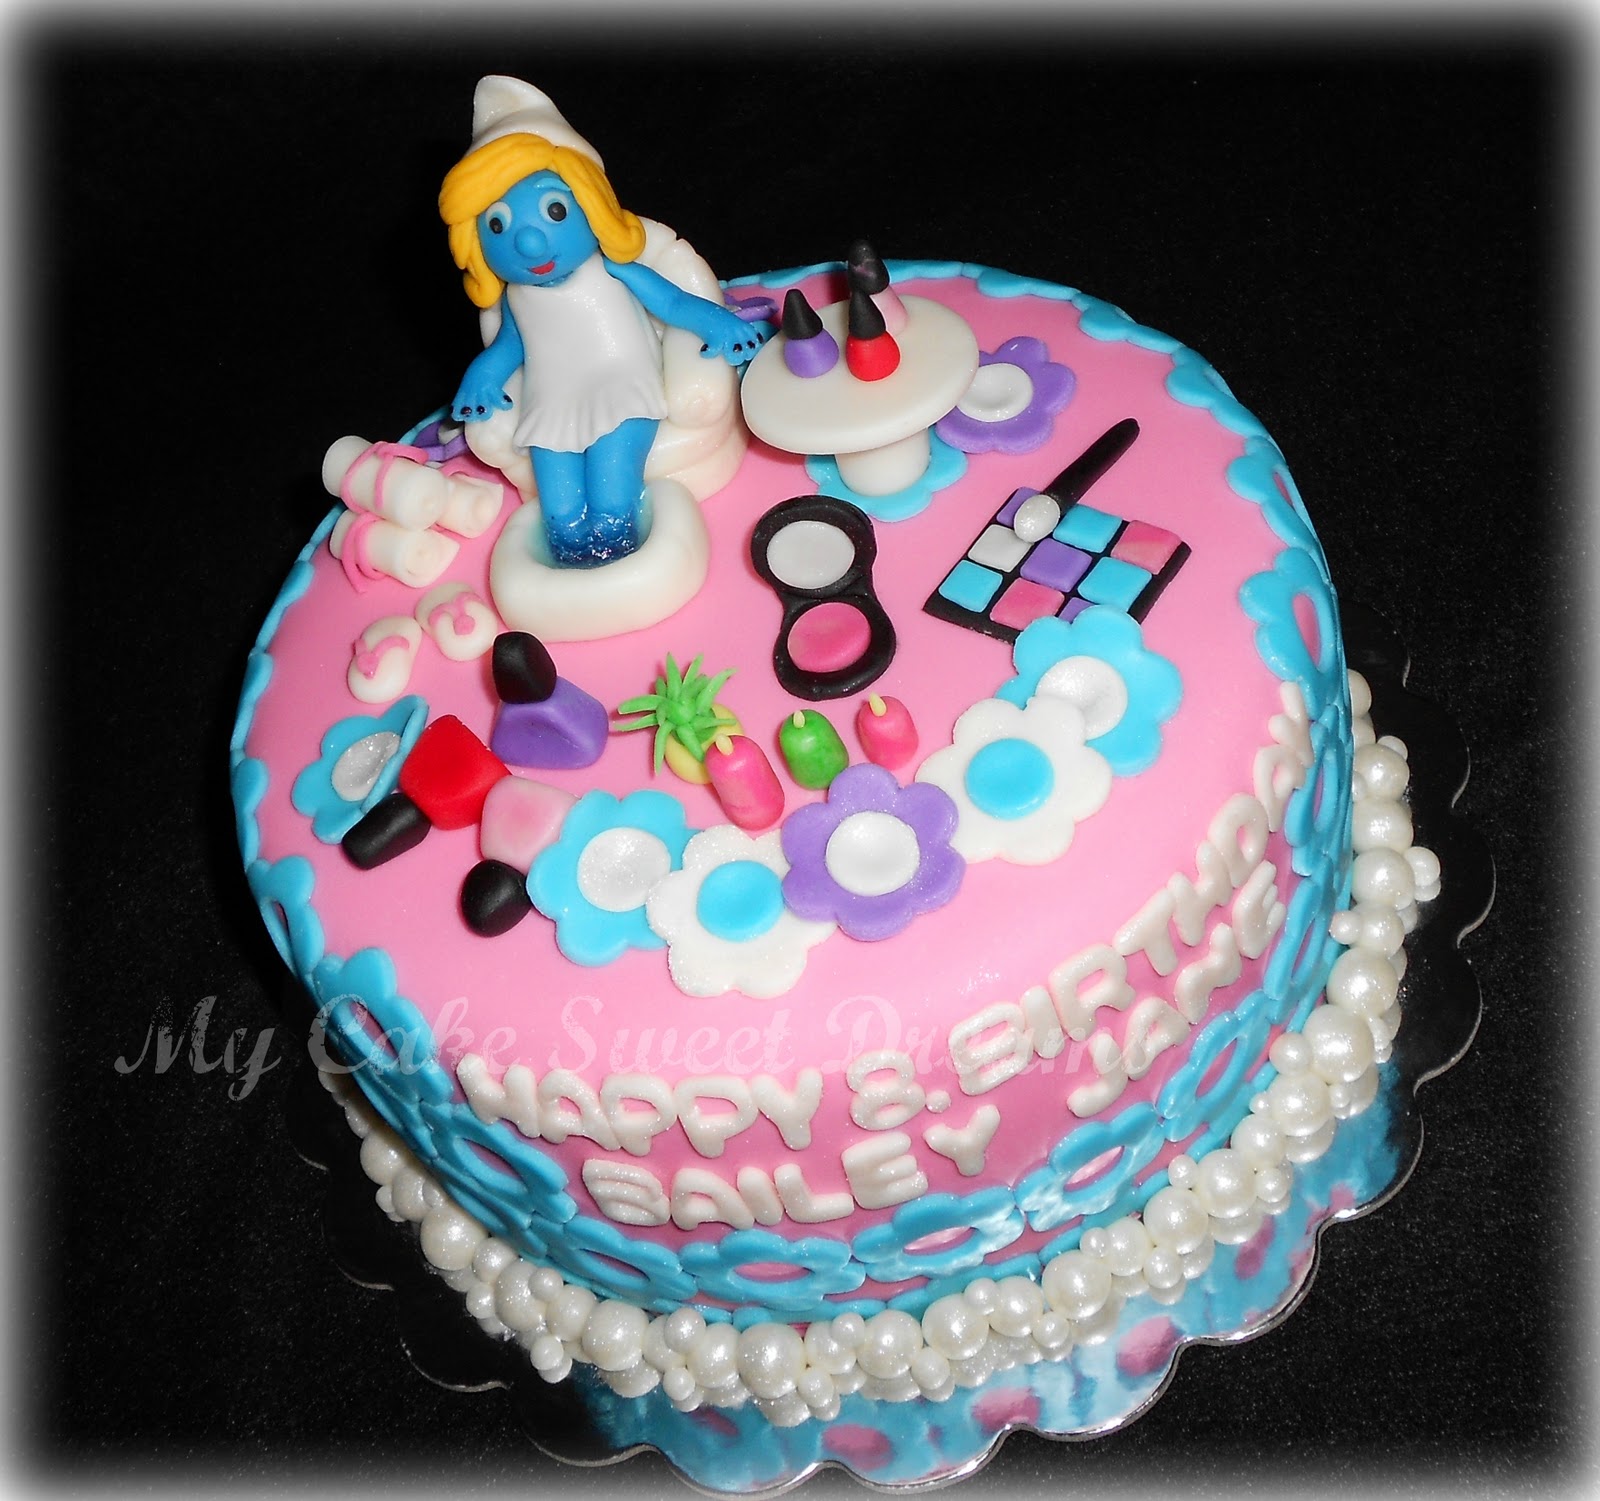 My Cake Sweet Dreams": Spa Birthday Cake